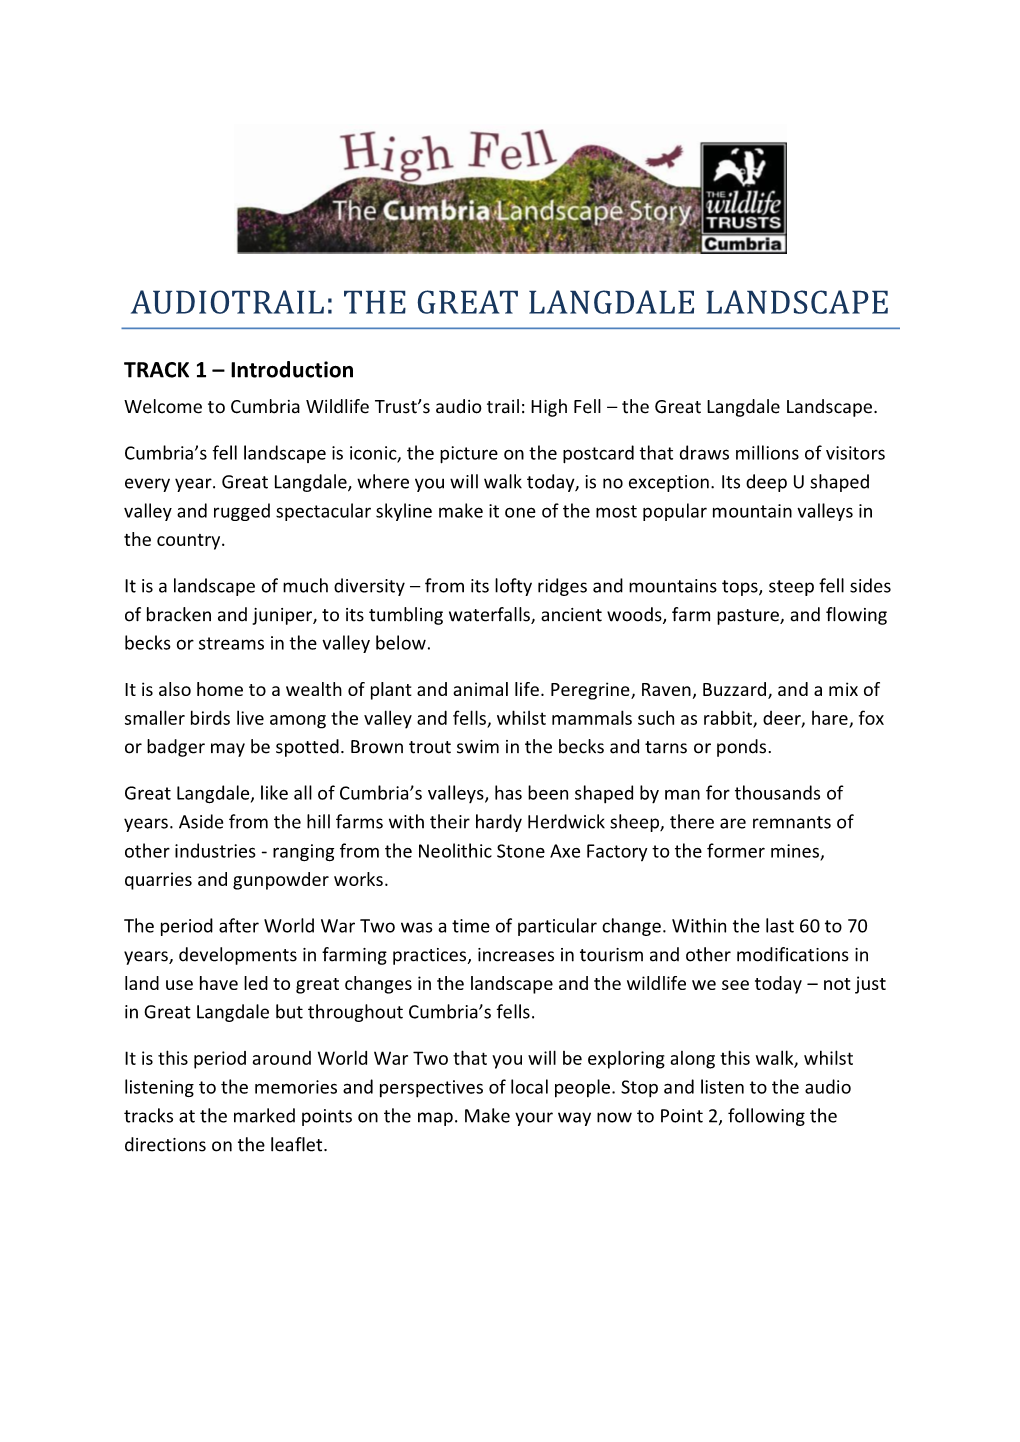 The Great Langdale Landscape